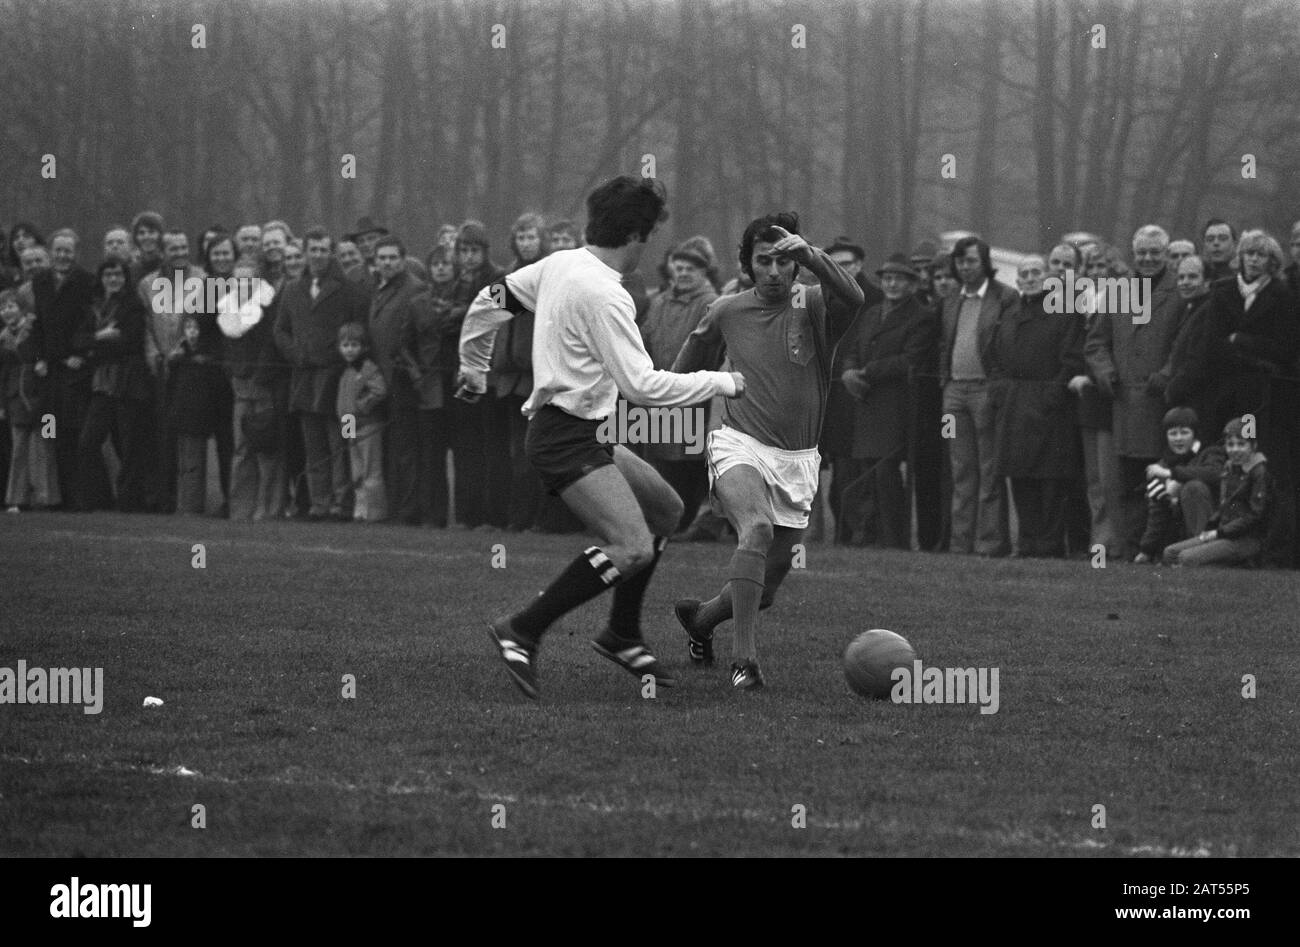 KHFC vs Oud Internationals, Coen Moulijn in action Date: January 1, 1973 Location: Haarlem Keywords: sport, football Personal name: Moulijn, Coen Stock Photo